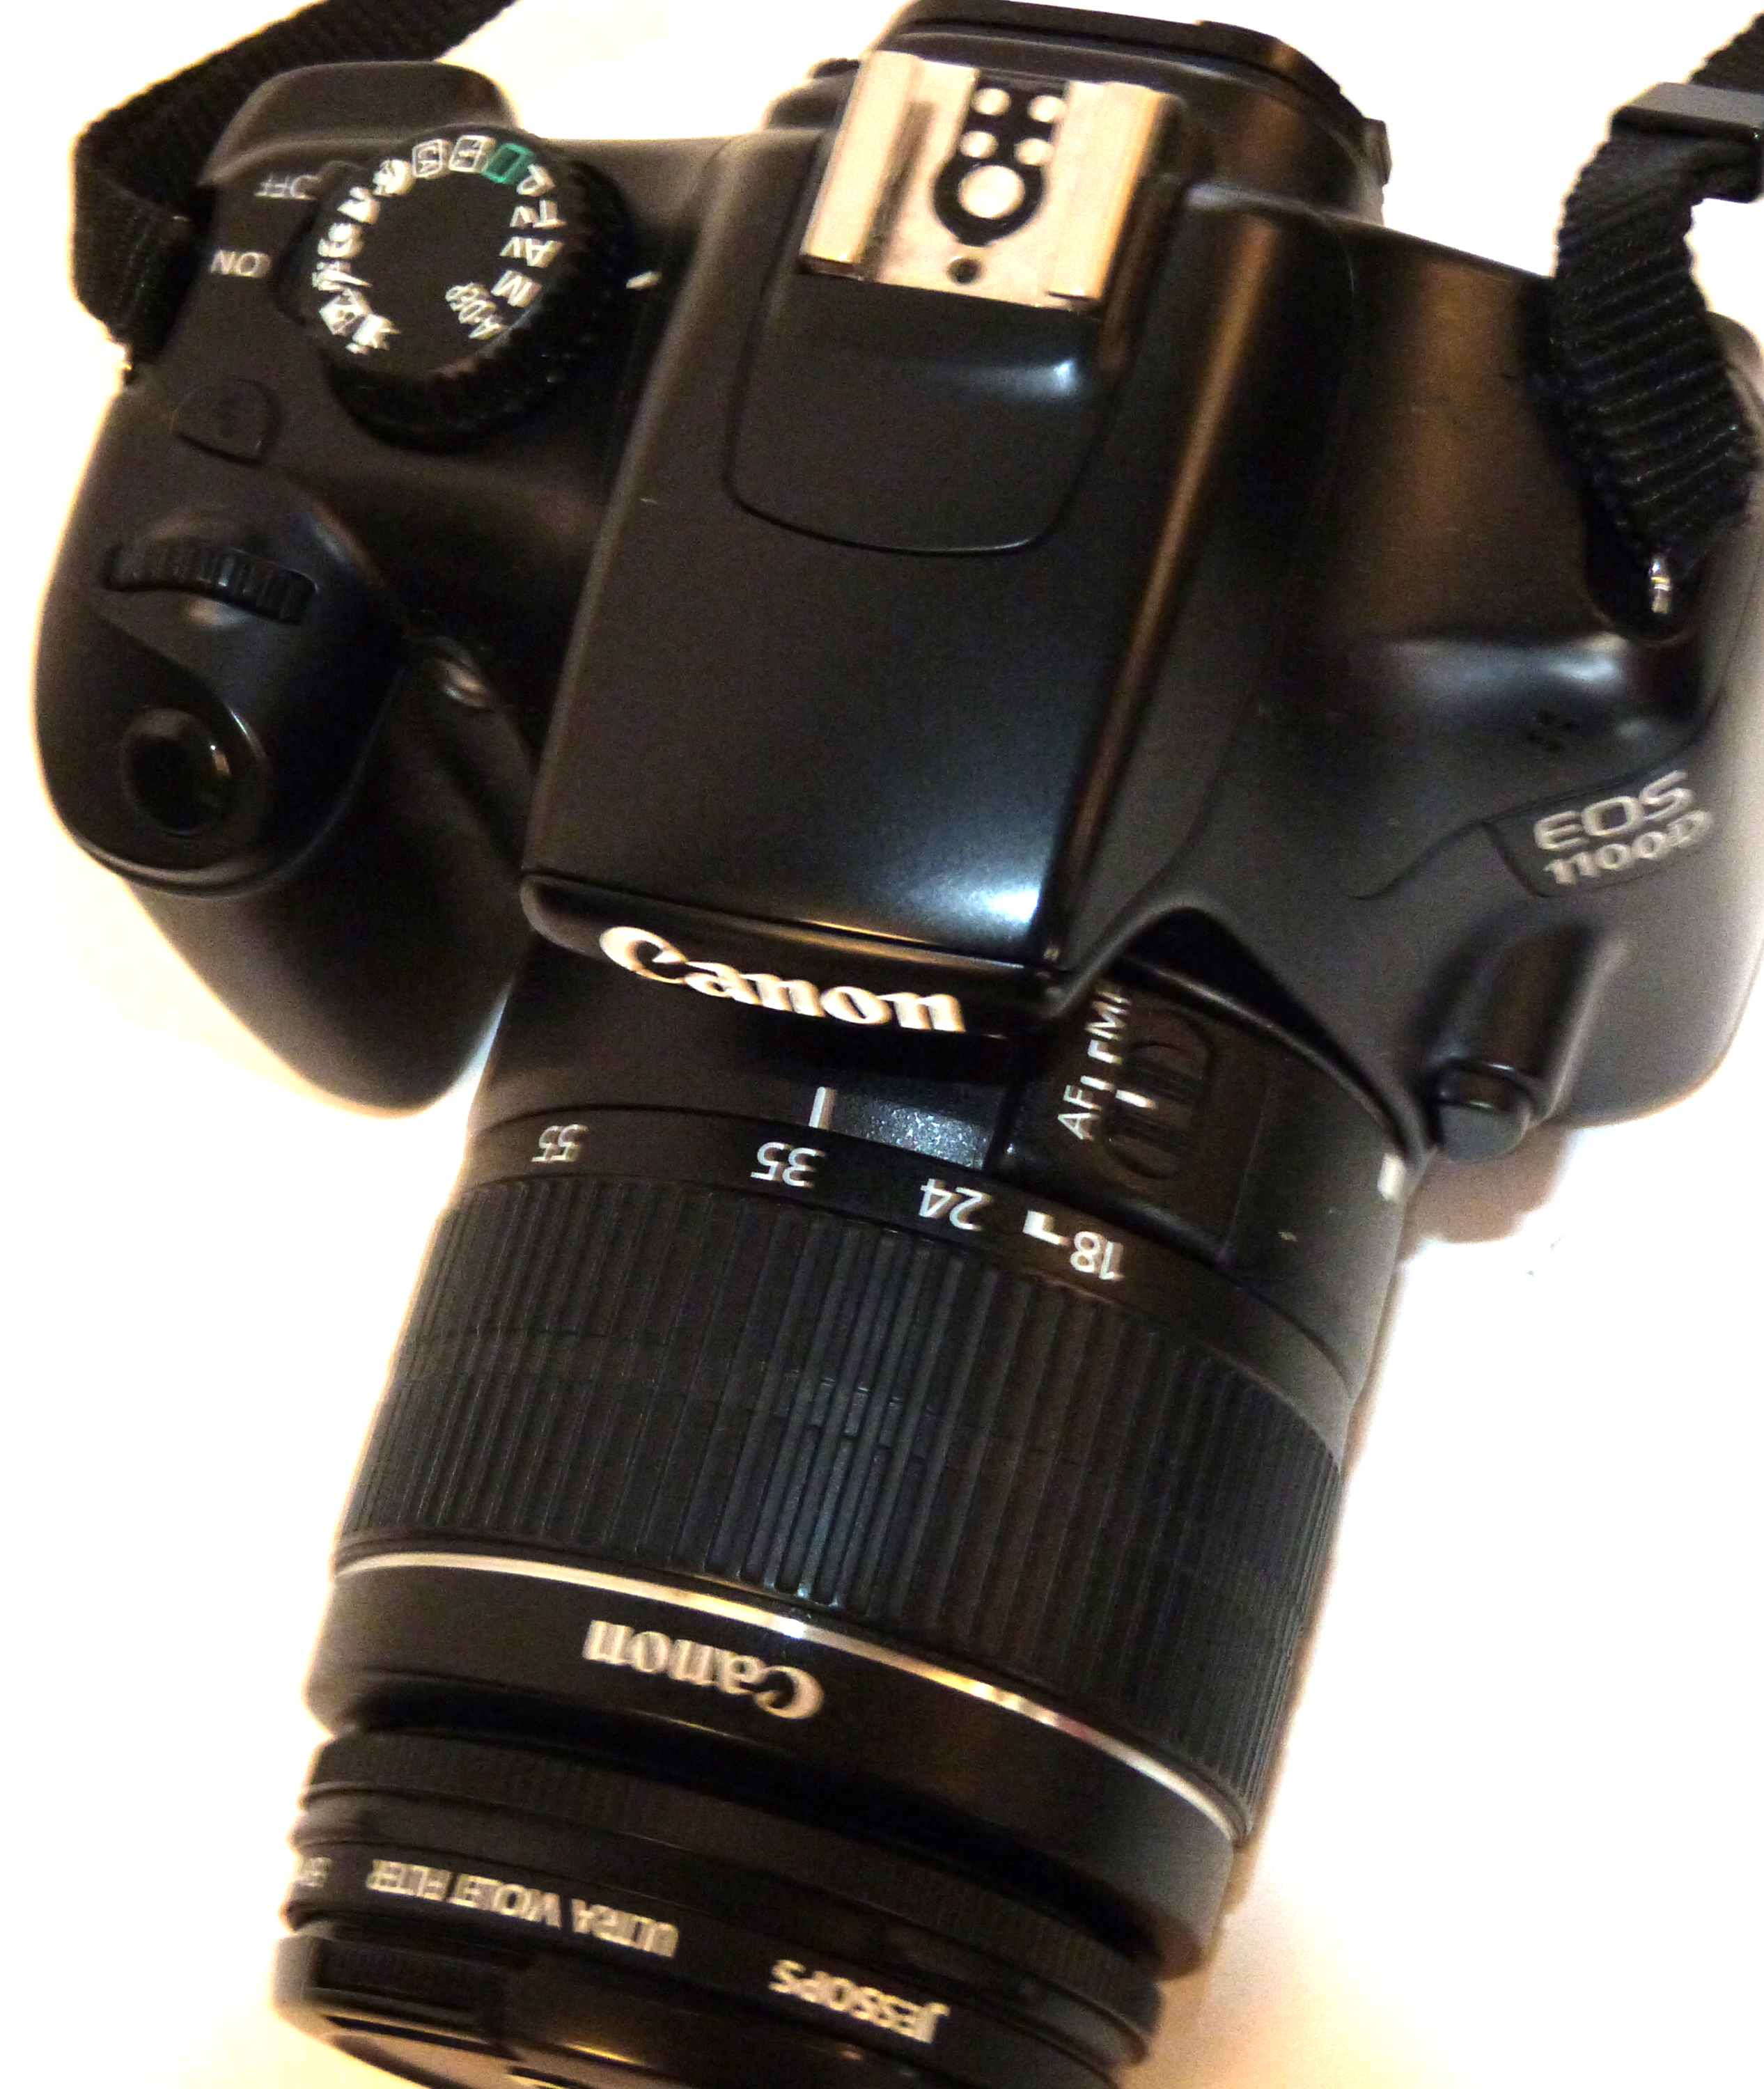 Canon EOS 1100 D digital camera together with Canon zoom lens EF-S 18-55mm, Tamron AF 70-300mm lens, - Image 3 of 6